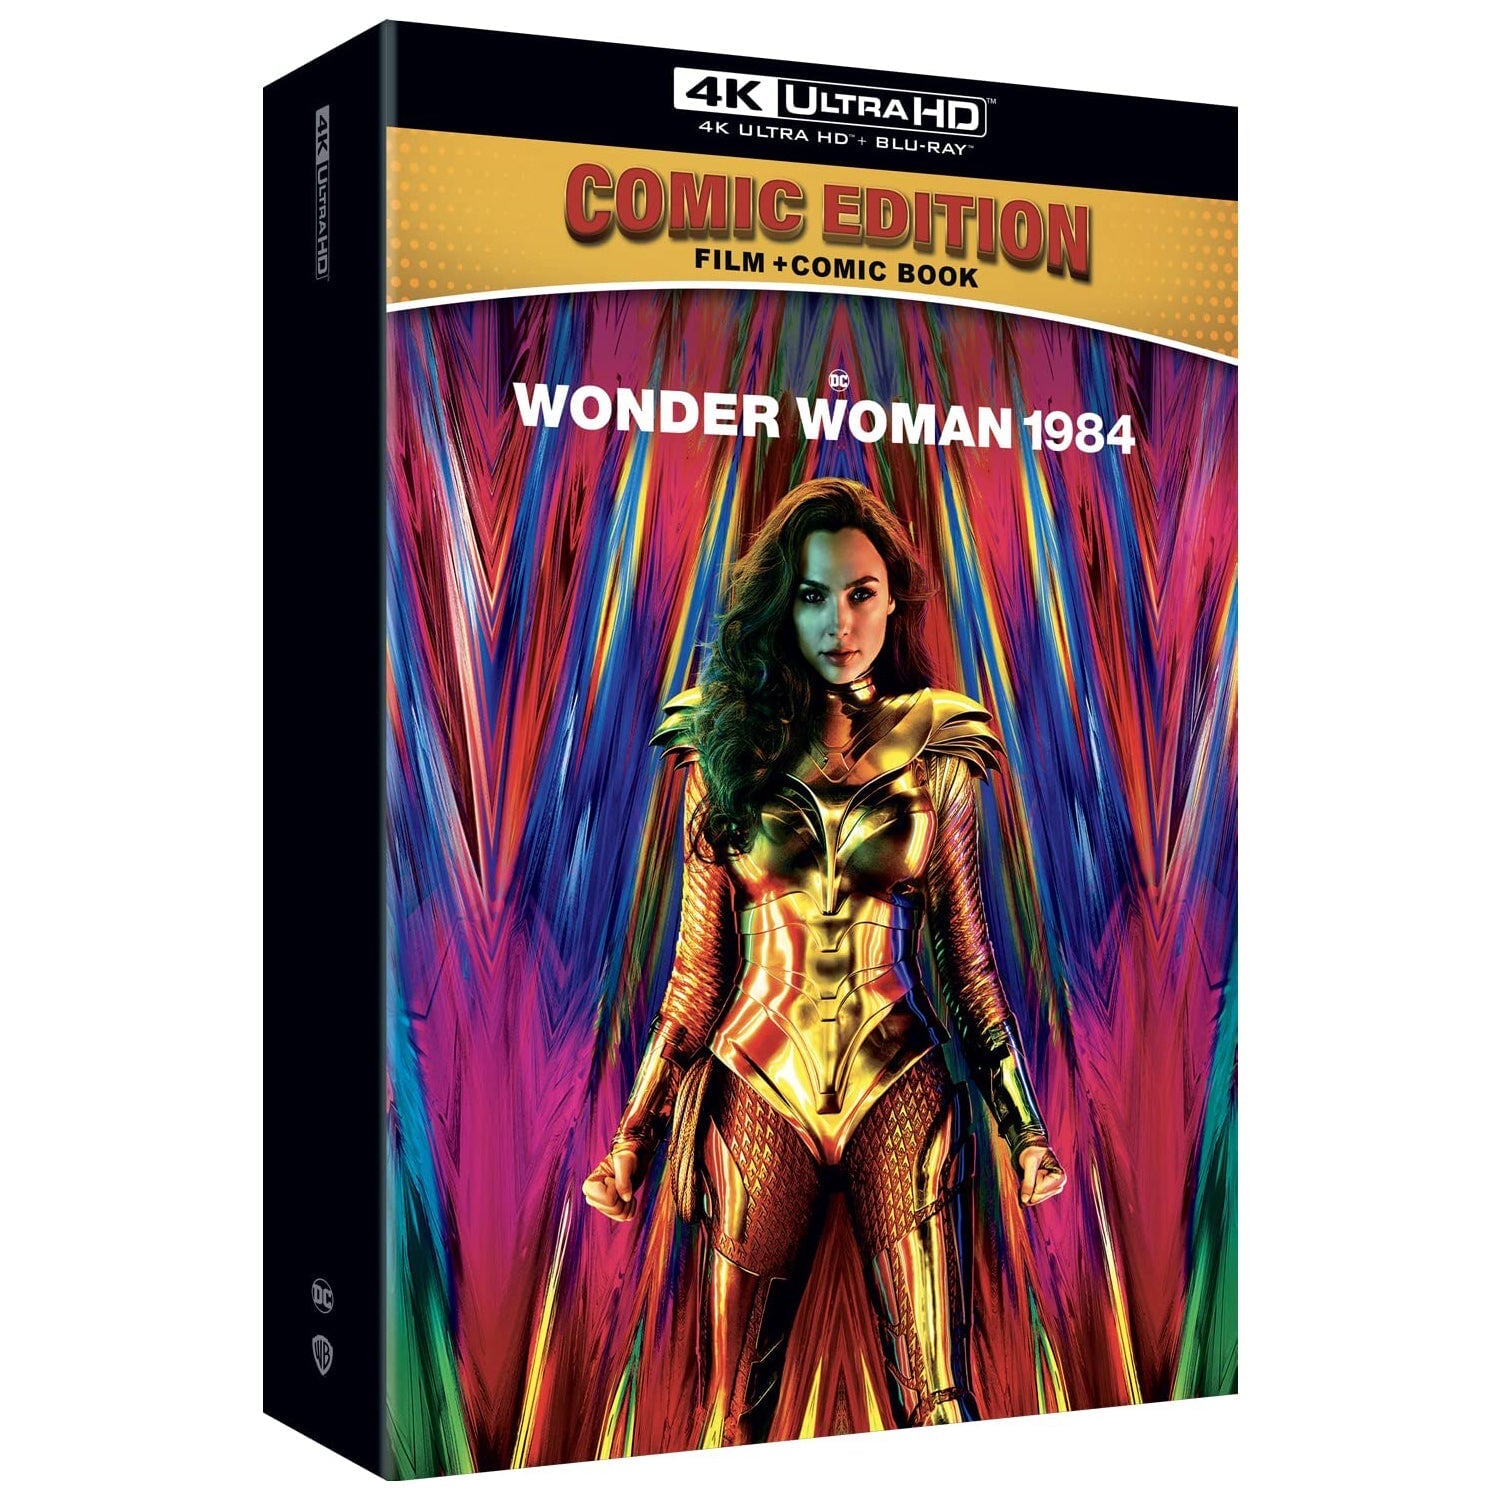 Wonder Woman 1984 (4K UHD + Blu-ray + Book + Poster) Comic Edition